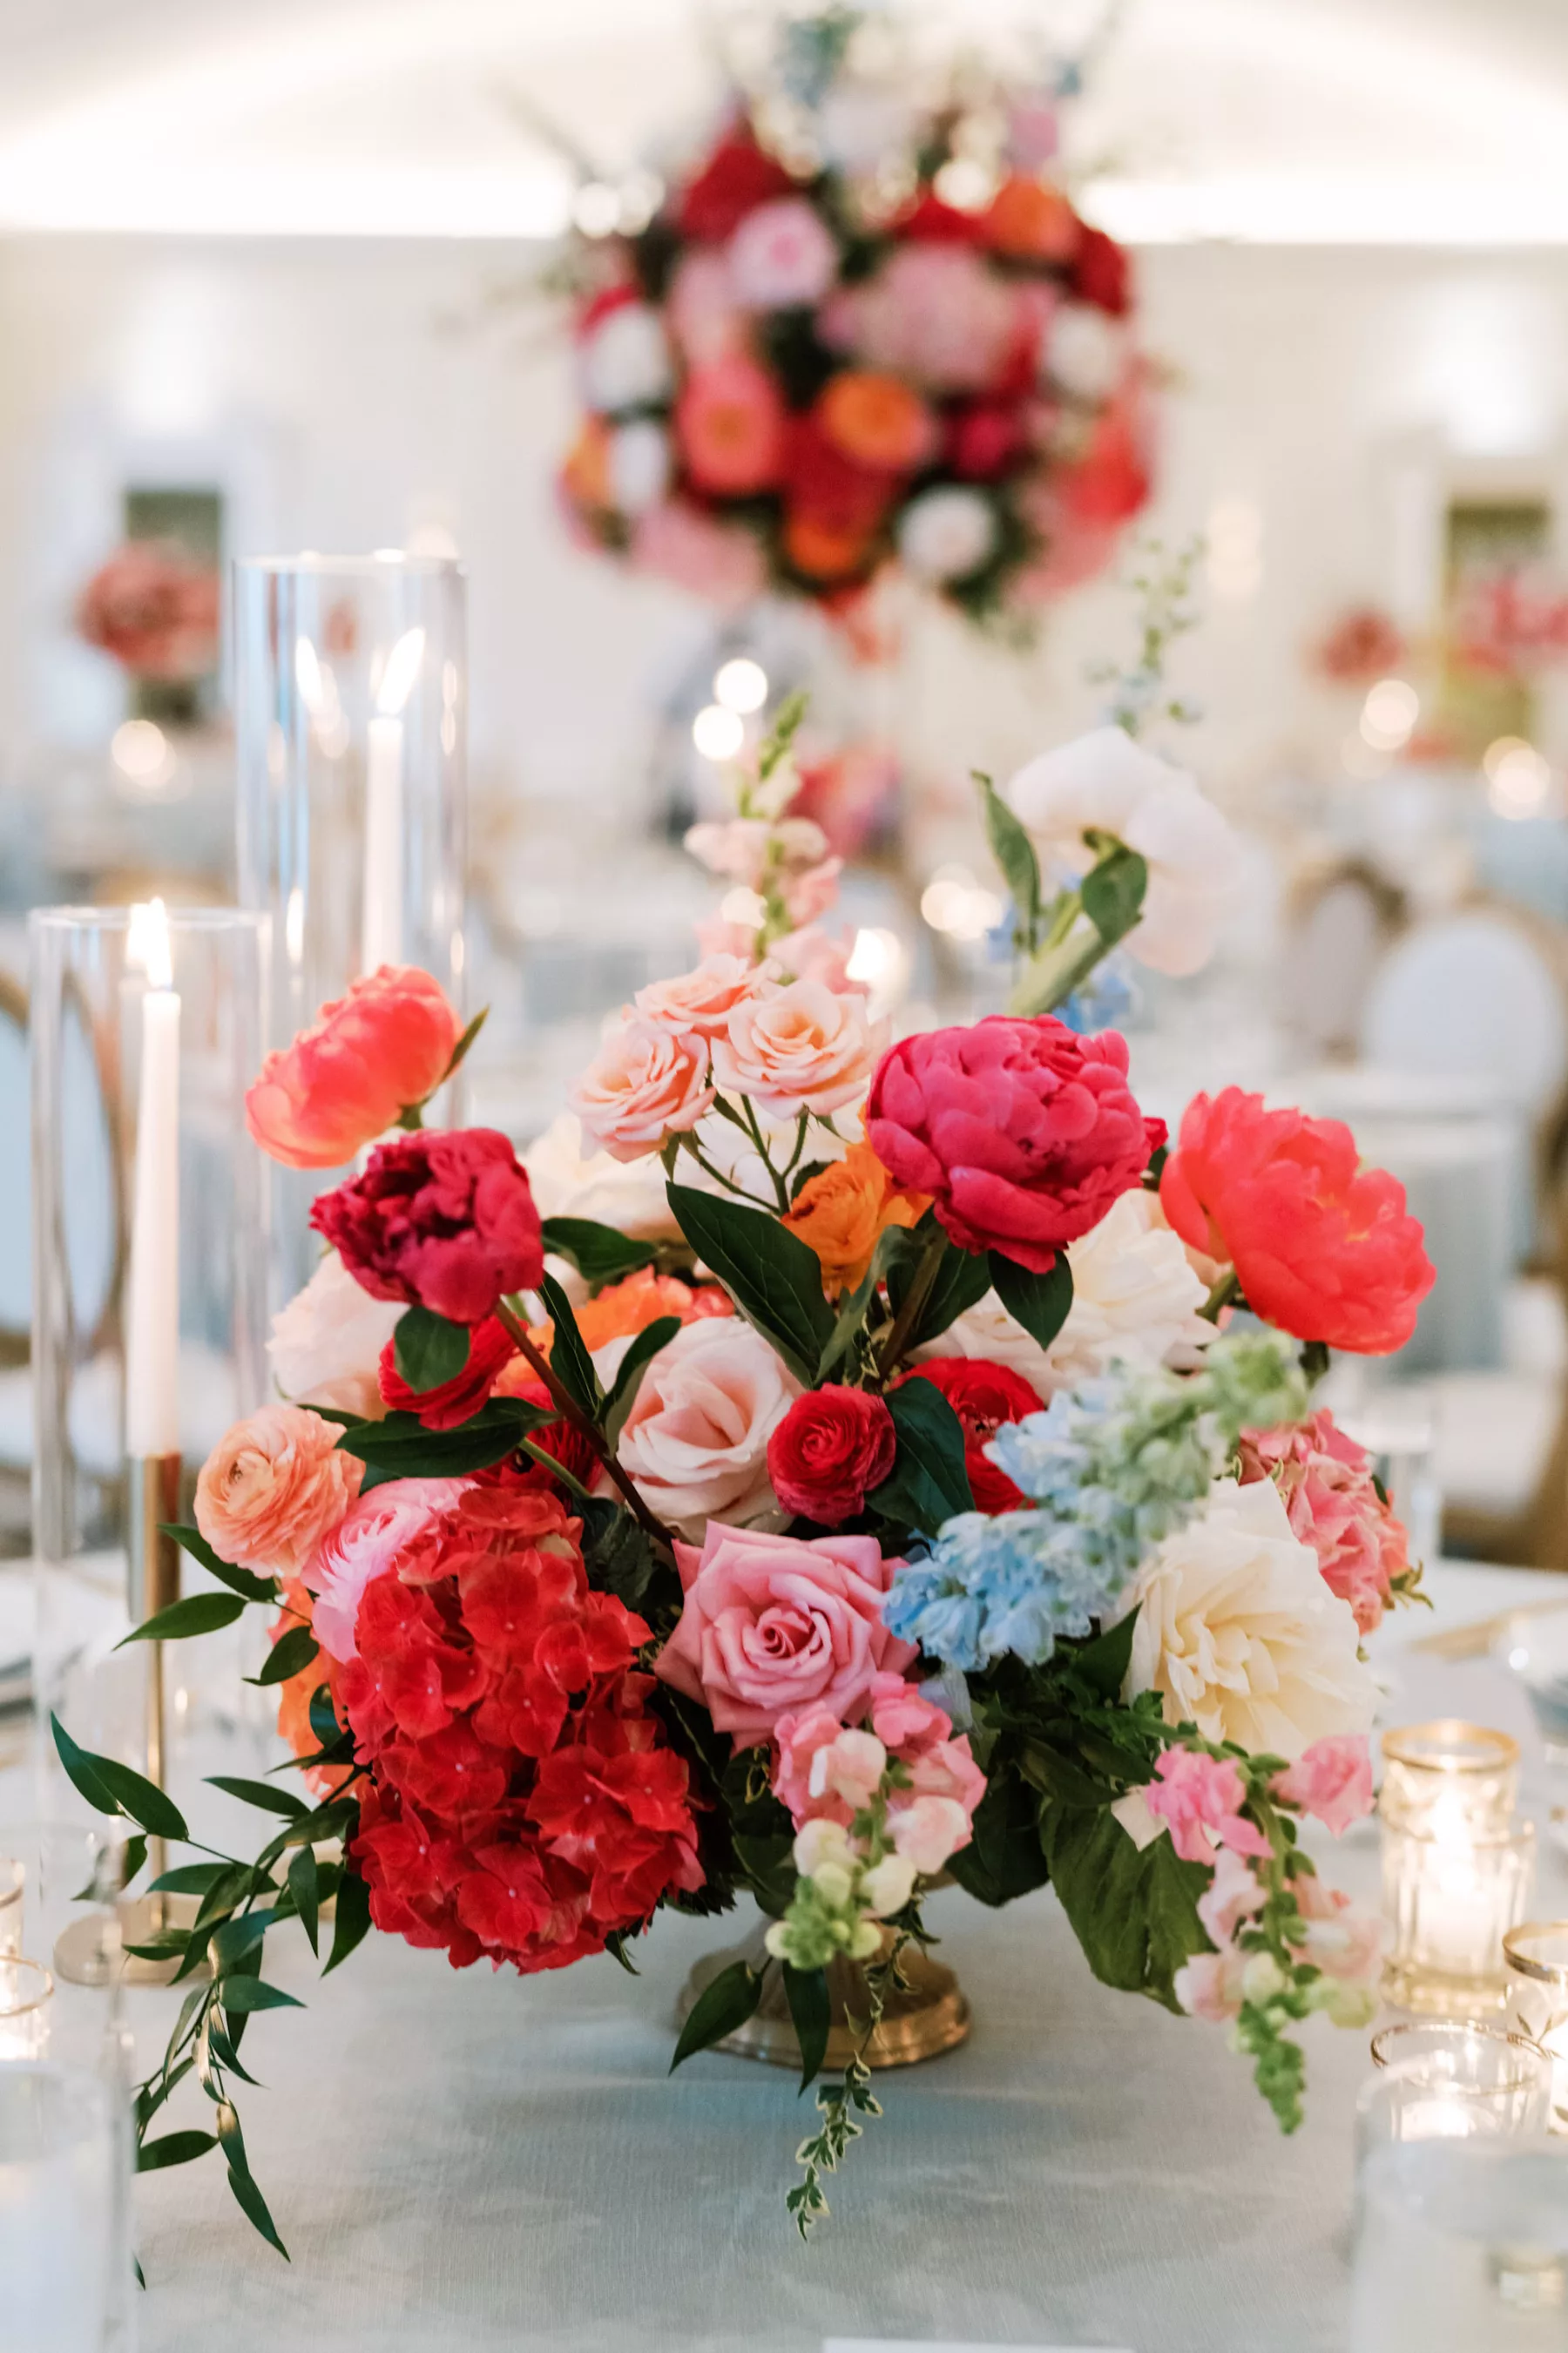 Luxurious Summer Wedding Reception Centerpiece Decor Ideas | Pink Anemones and Hydrangeas, Orange Garden Roses, Blue Stock Flowers | Tampa Bay Florist Bruce Wayne Florals